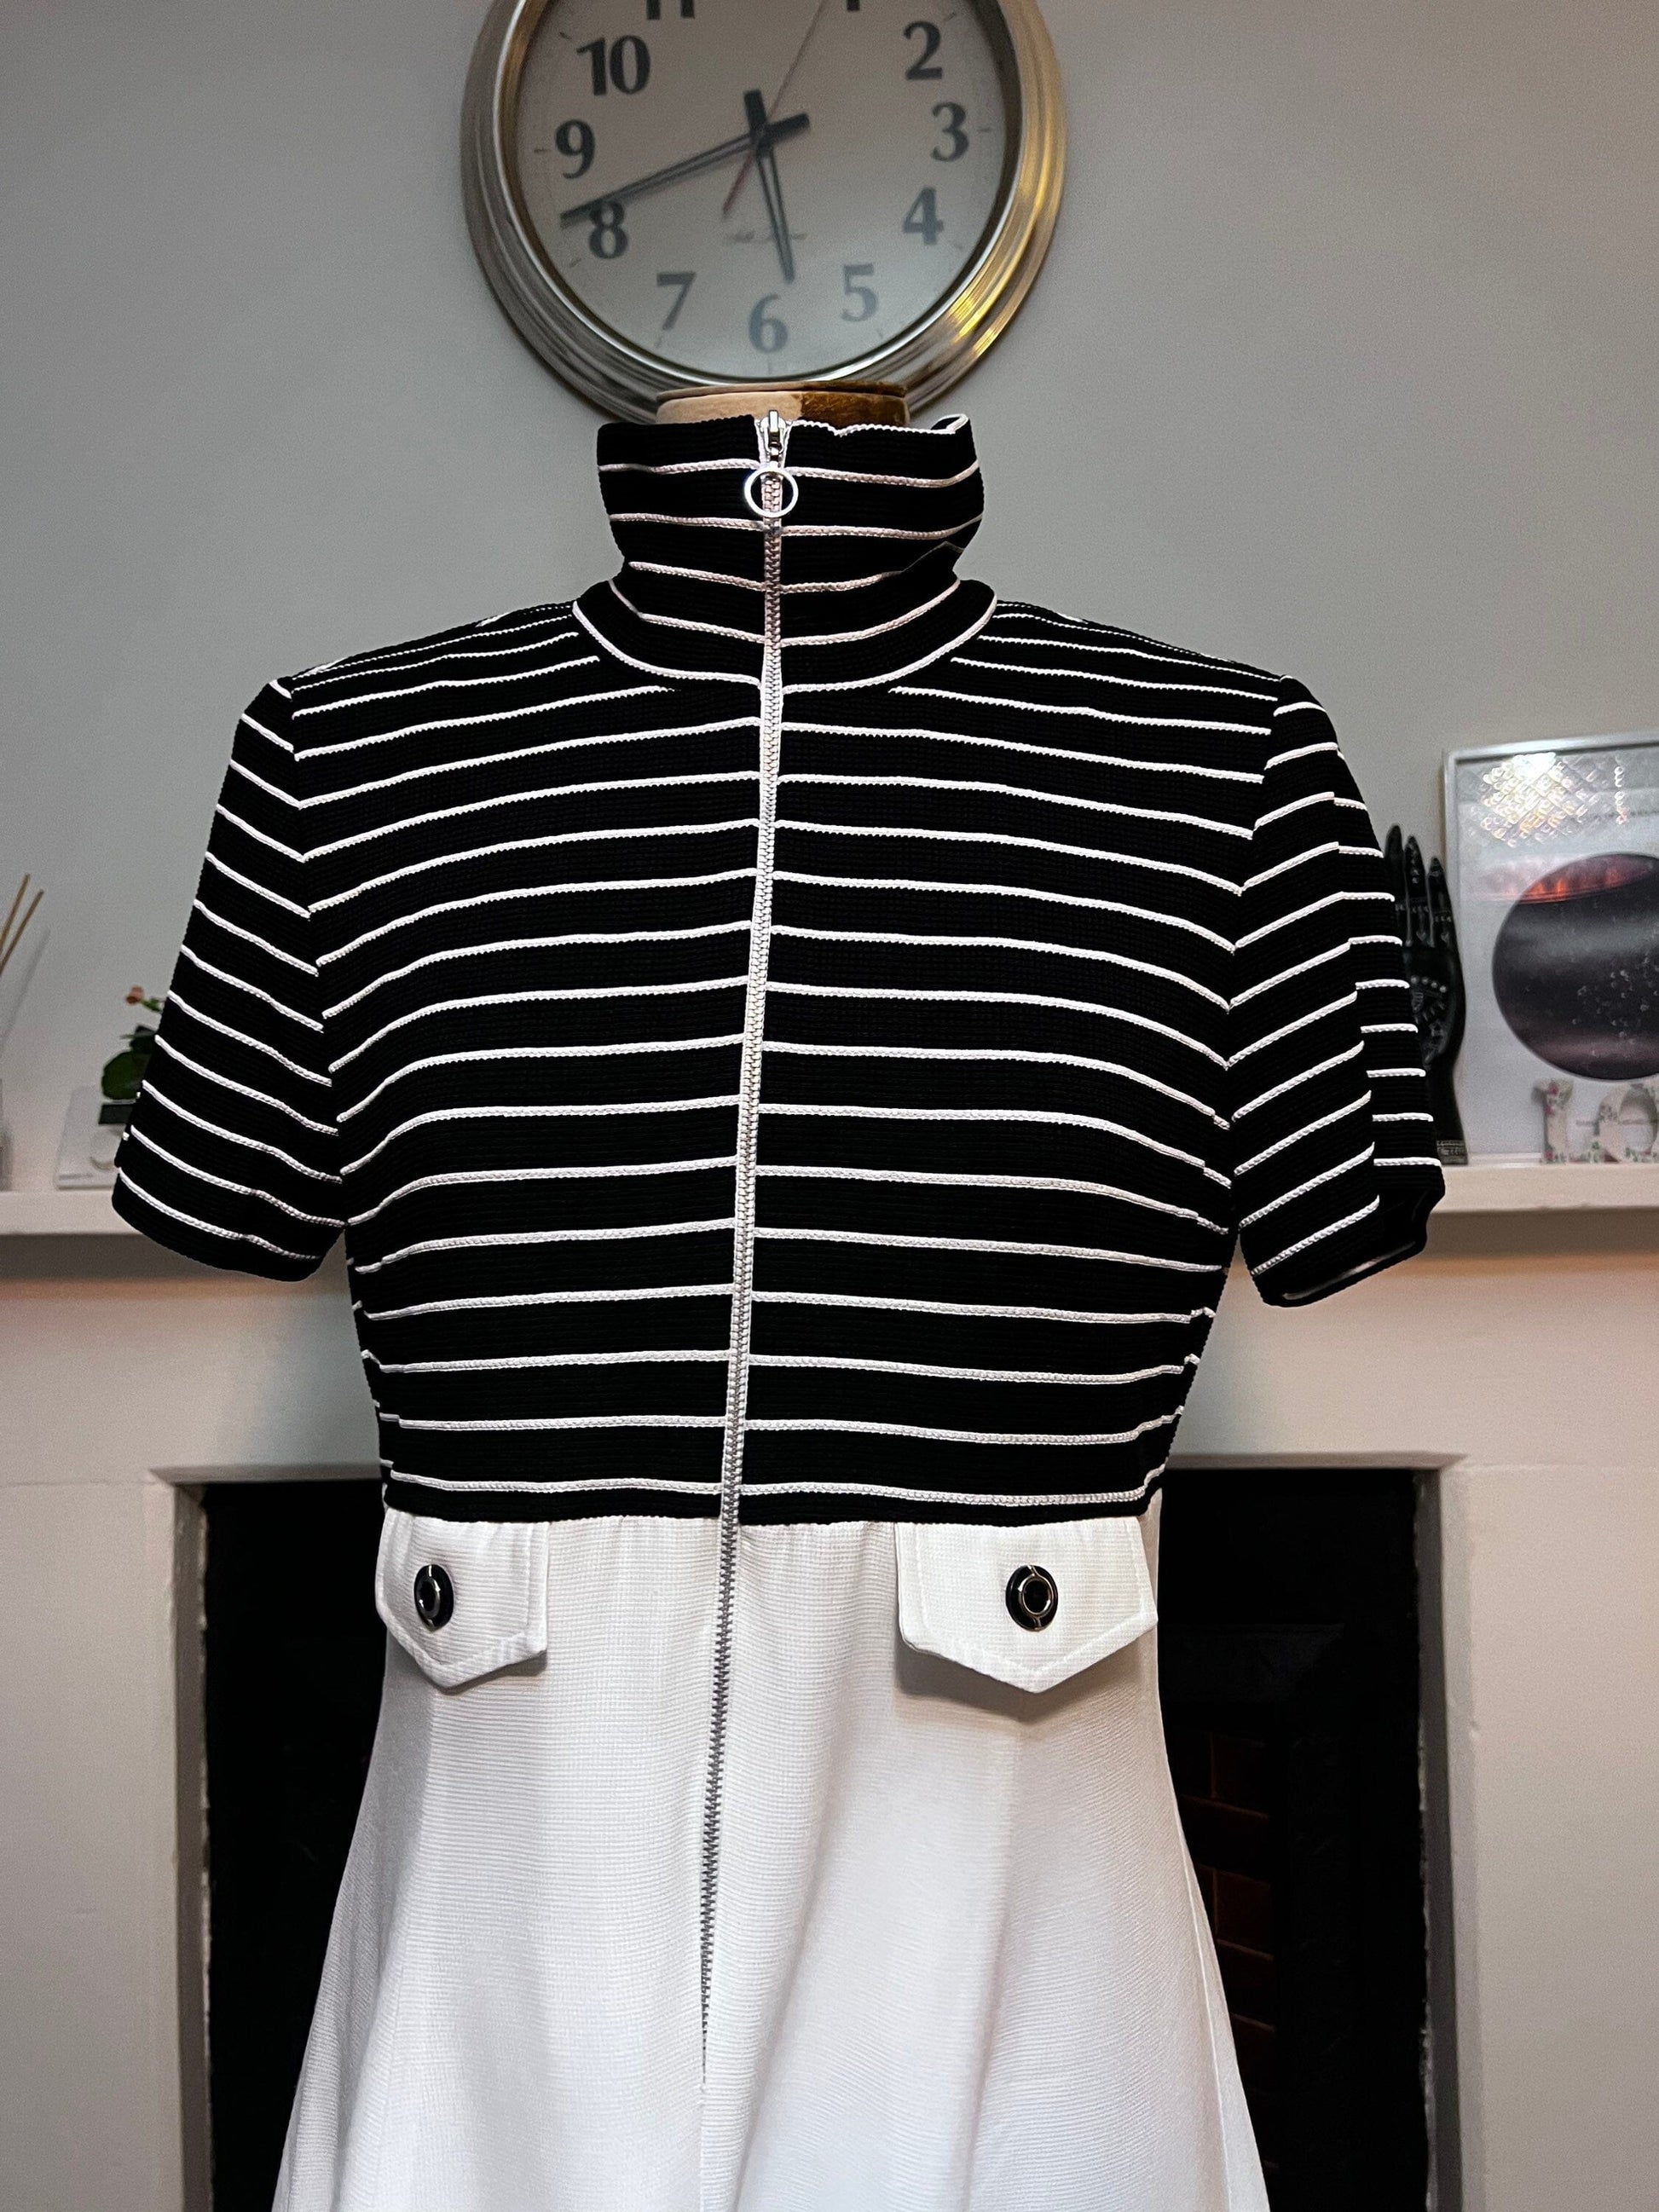 Vintage Striped Tennis Dress Zip Front white Skirt Black and White Turtle Neck Dress Short Sleeve US10 -1980s